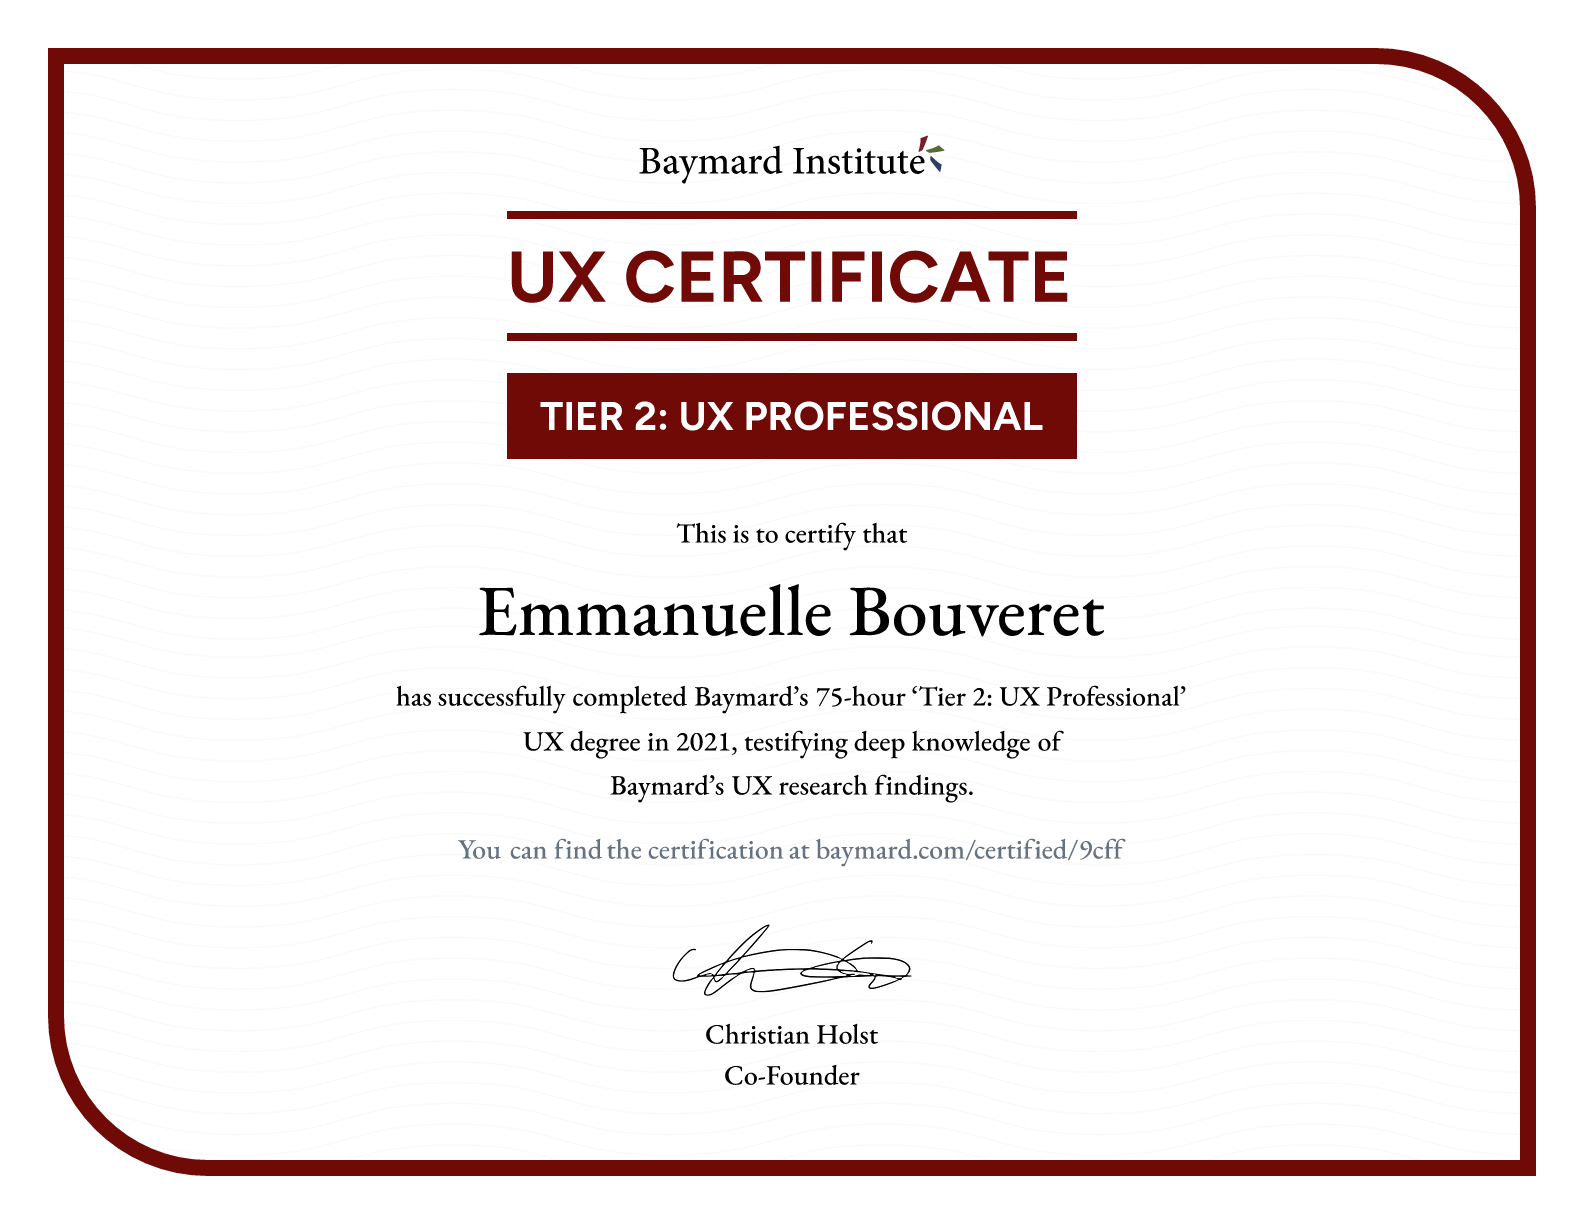 Emmanuelle Bouveret’s certificate